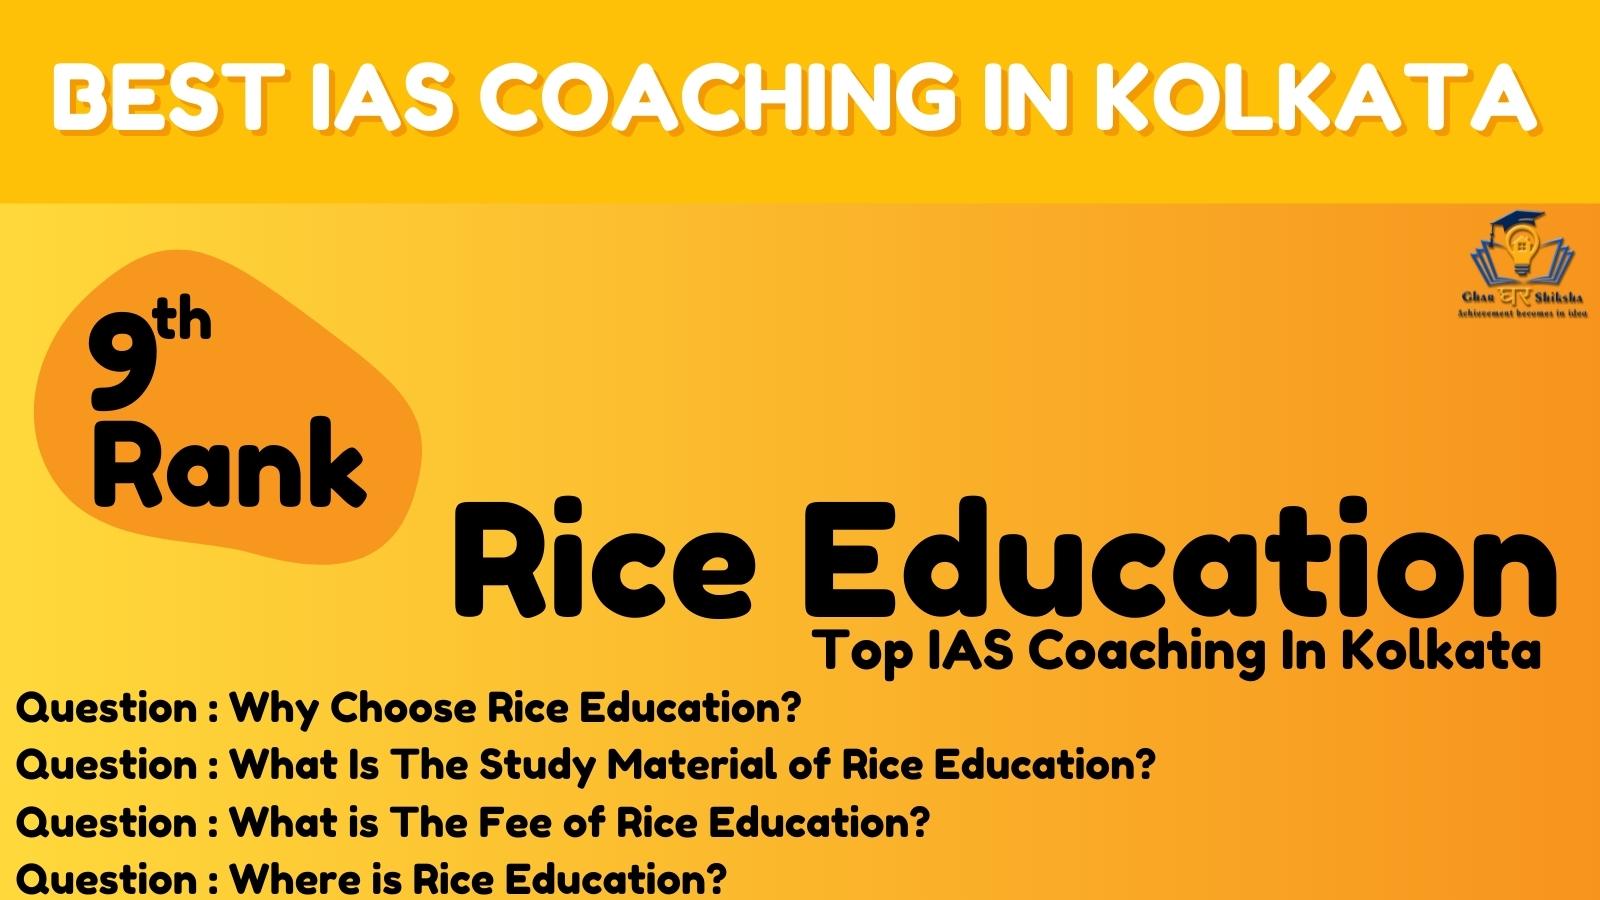 Rice Education | Top IAS Coaching In Kolkata